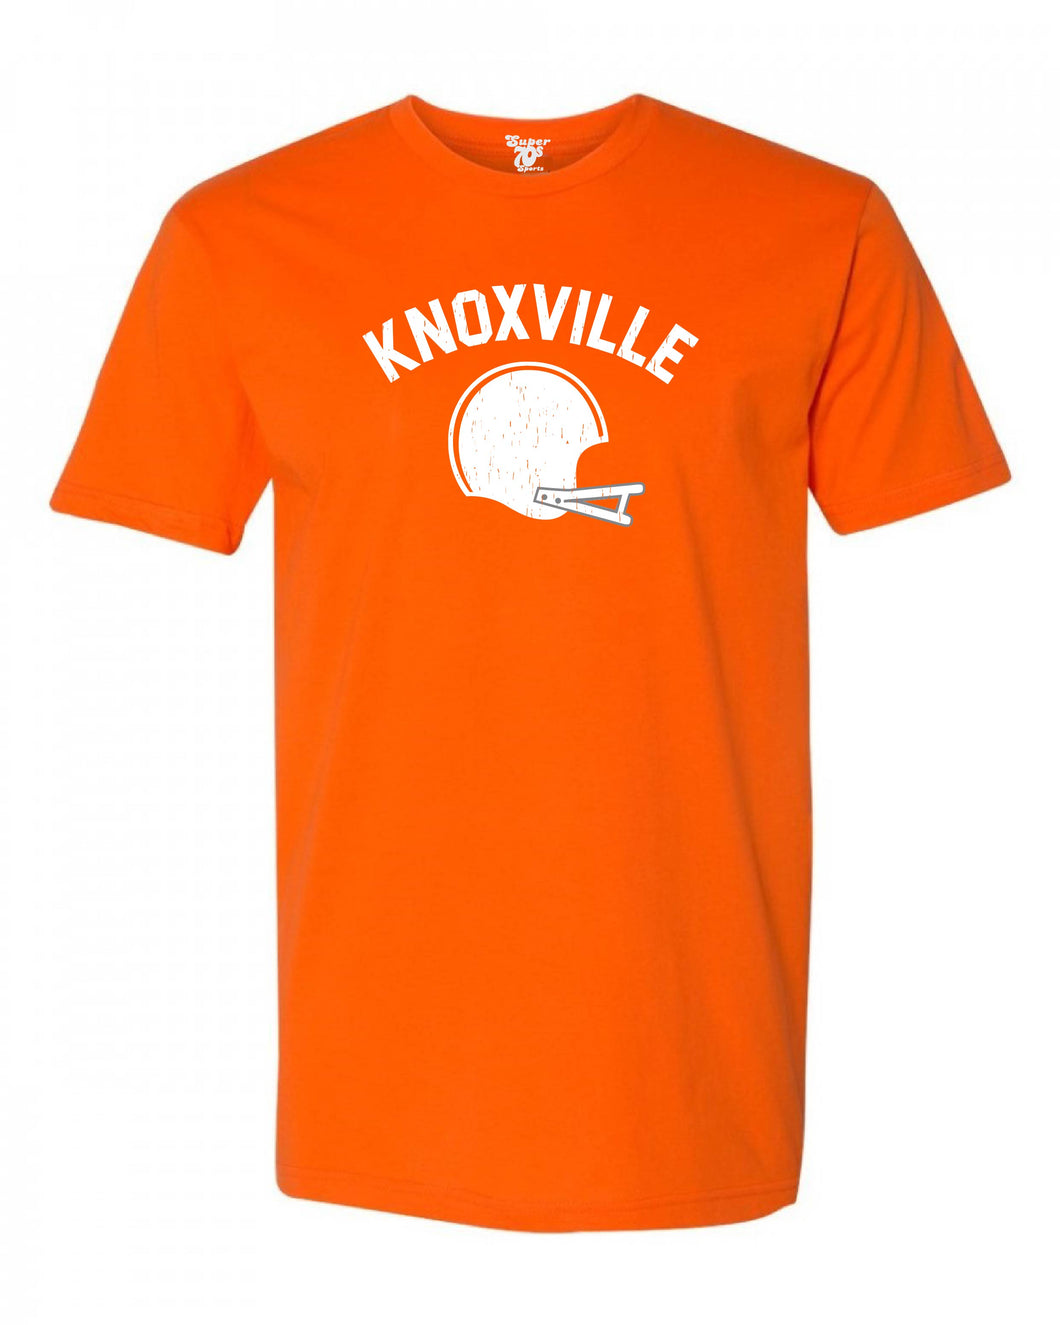 Knoxville Football Tee